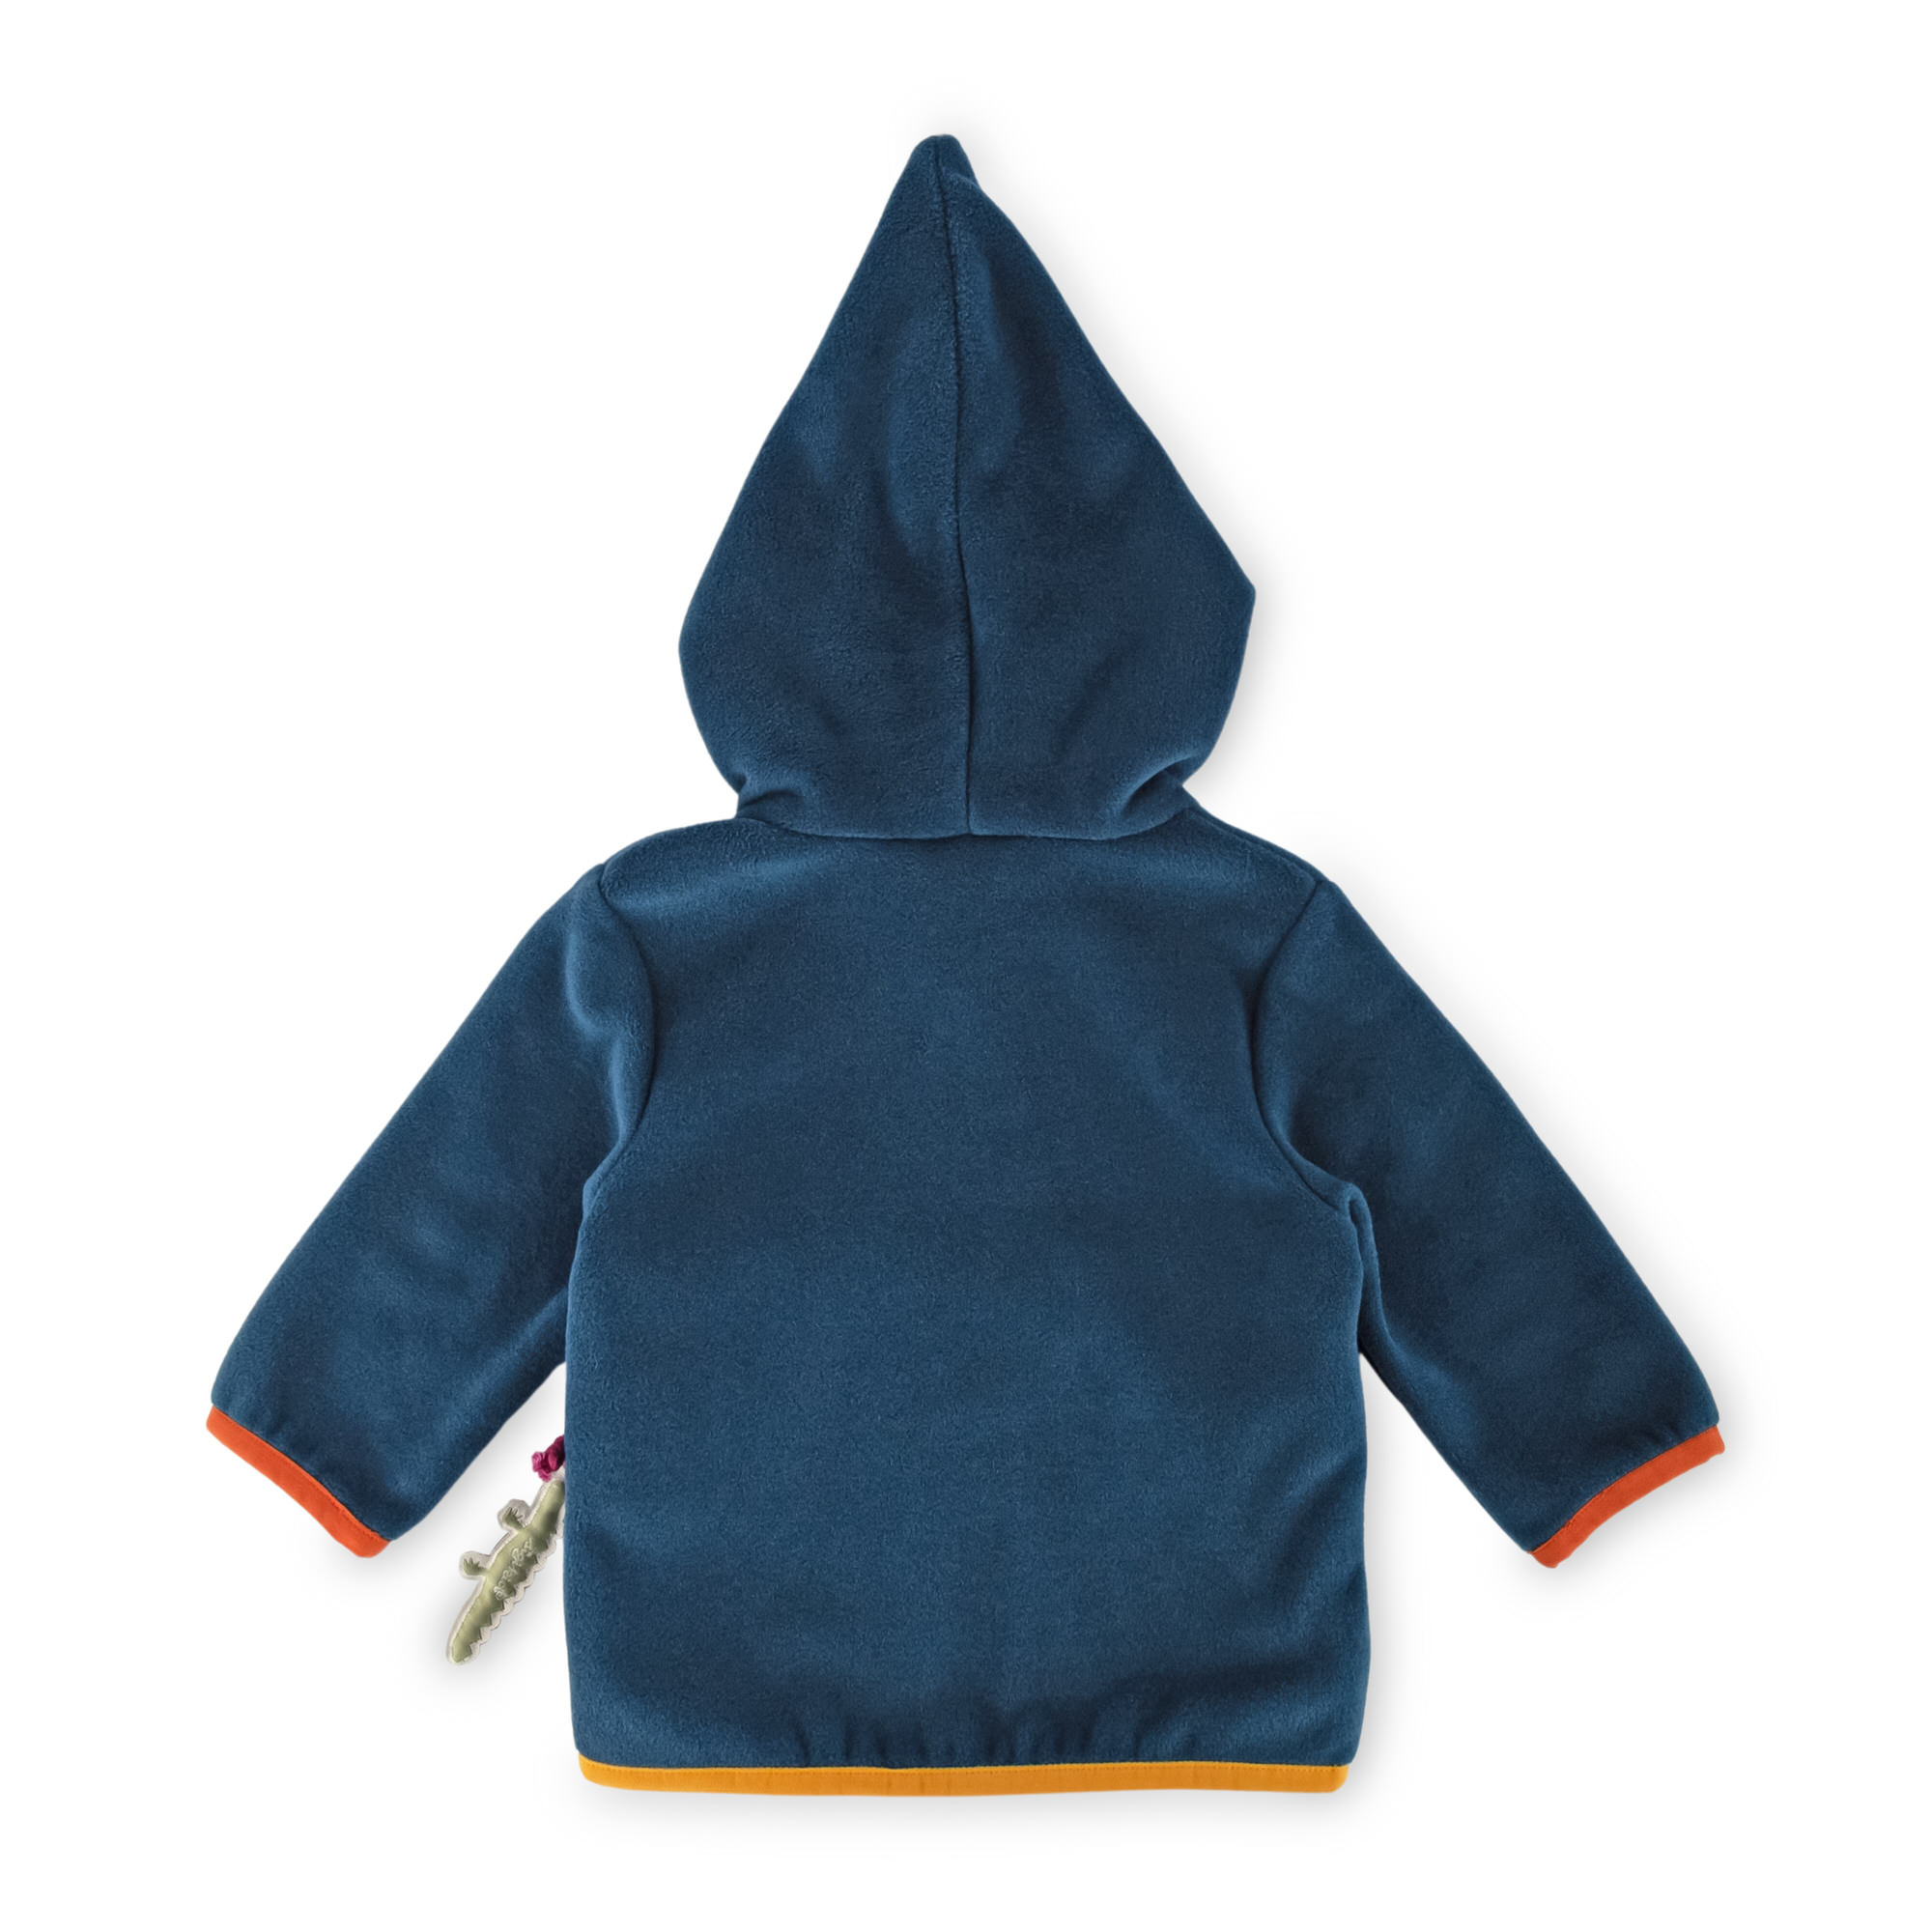 Pixie hood baby fleece jacket, dark teal blue